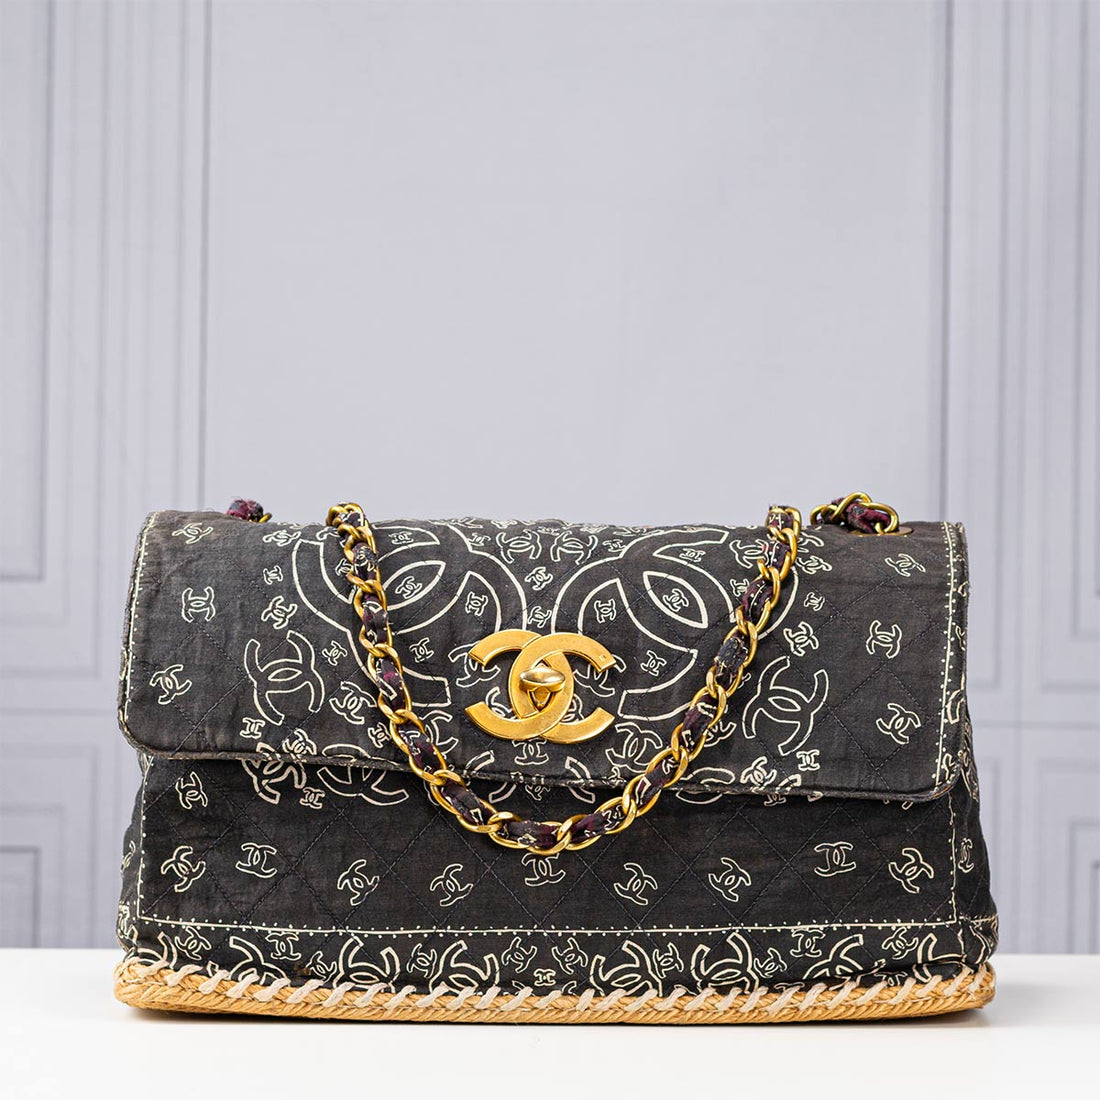 Chanel Jumbo Bandana Flap Bag